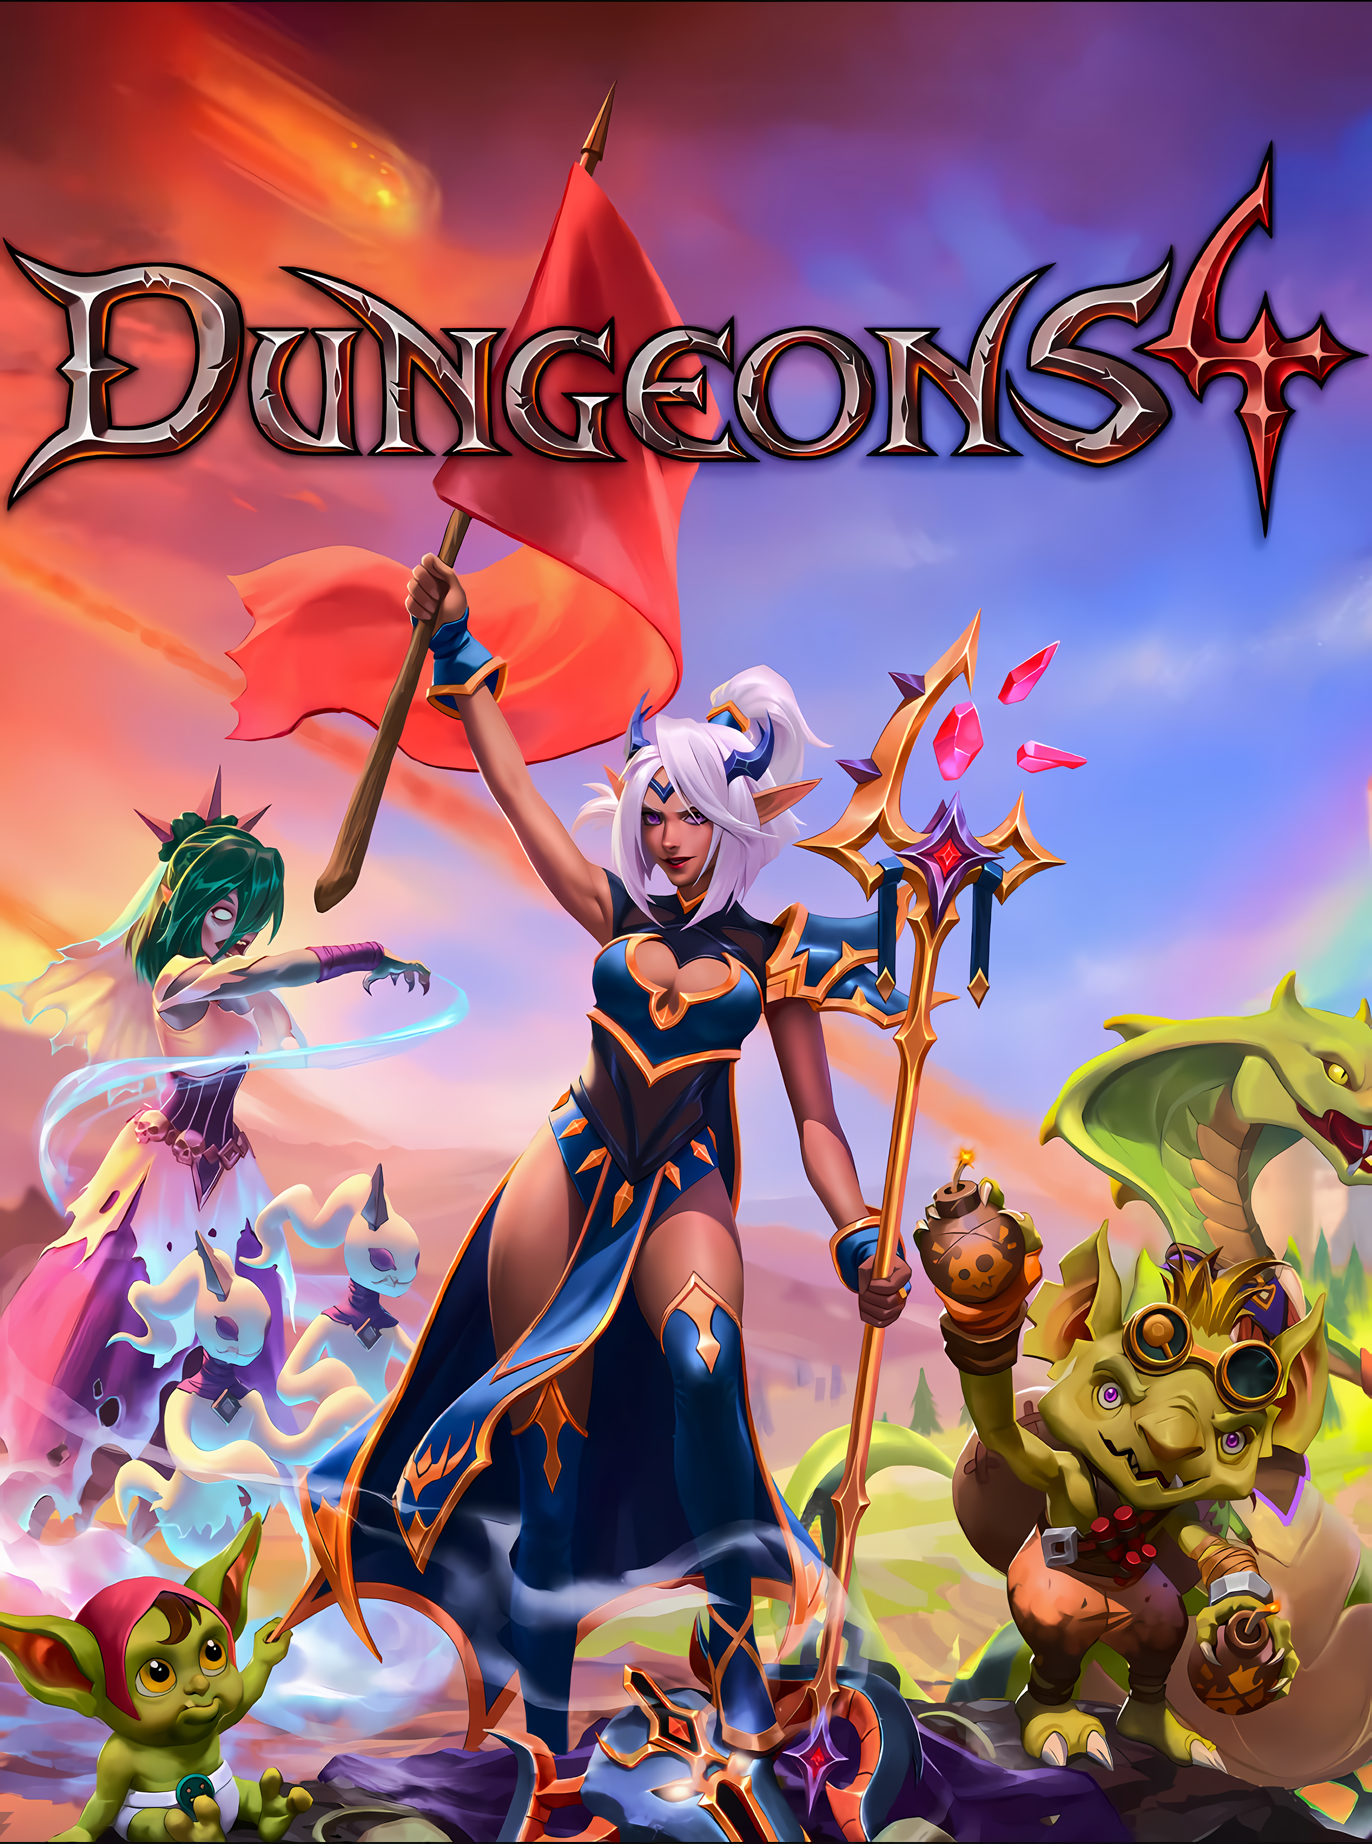 Dungeons 4 [PC, Цифровая версия] (Цифровая версия) цена и фото